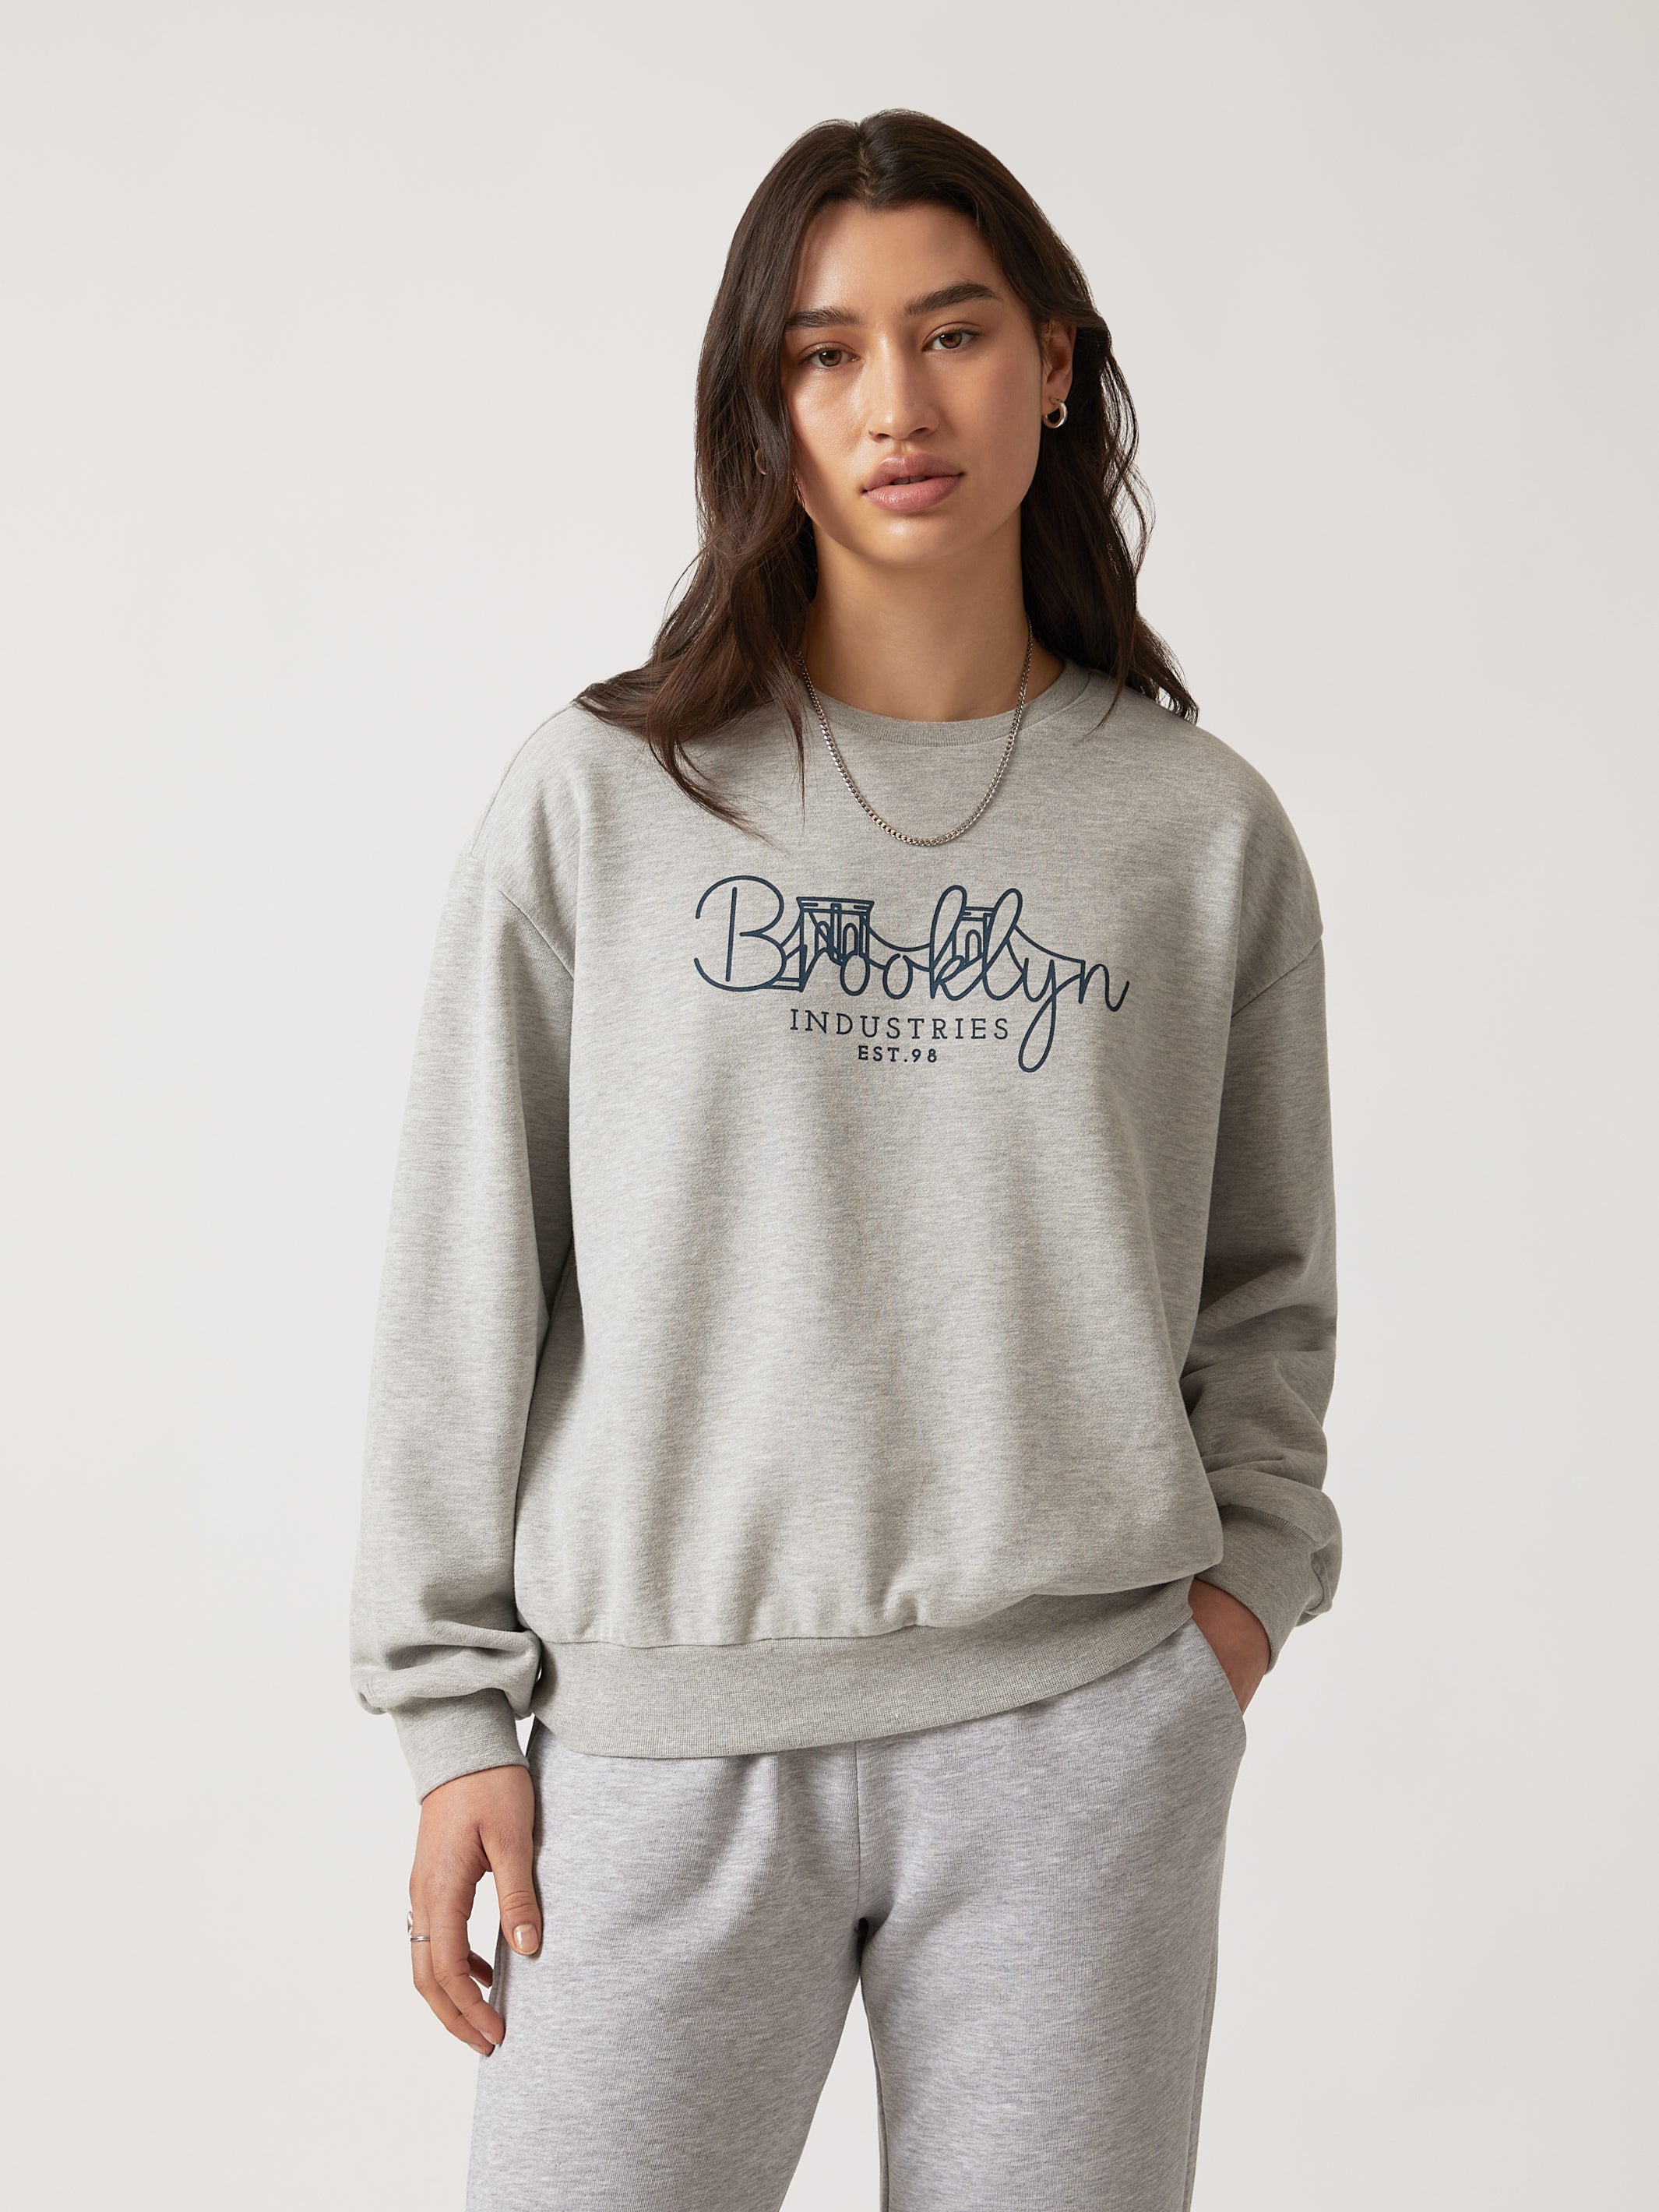 Women's Brooklyn Bridge Sweatshirt in Grey Melange - BROOKLYN INDUSTRIES